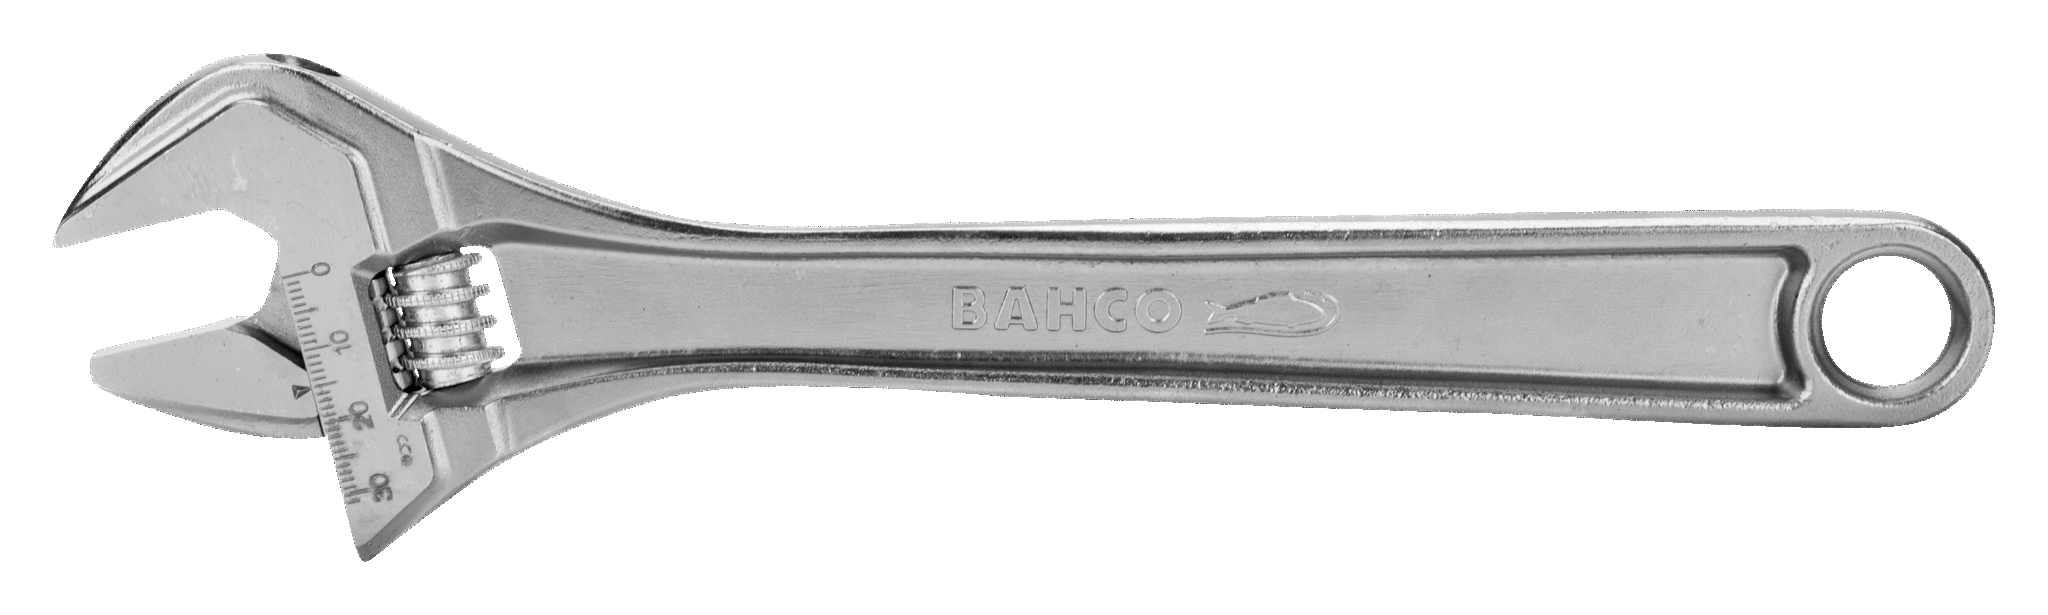 Mỏ lết Bahco Thụy Điển Seri 80C